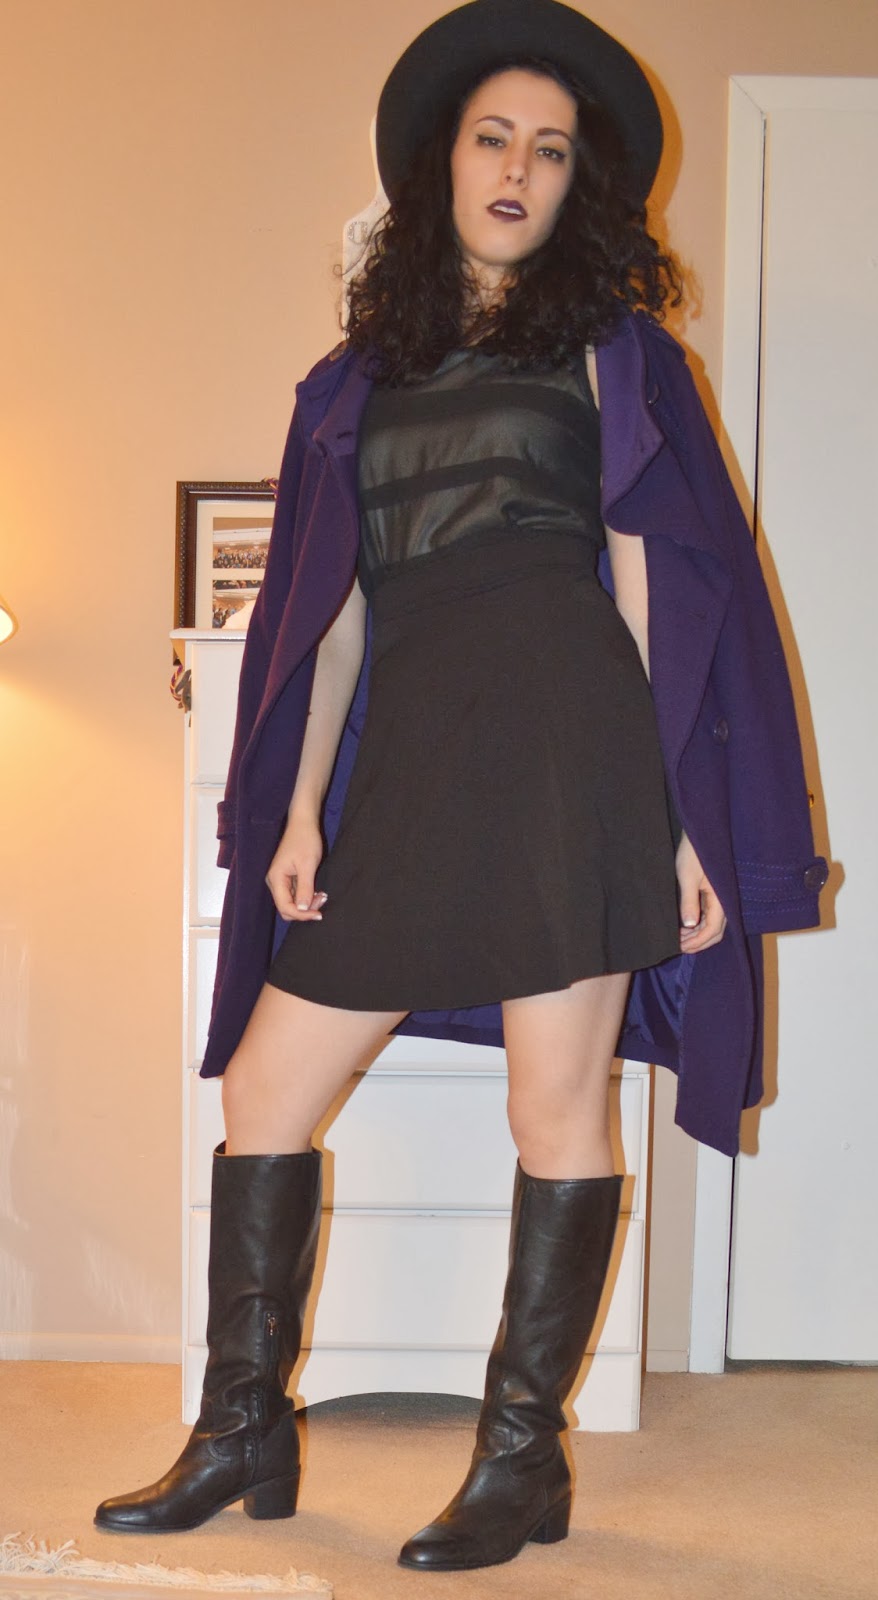 fashionALLI: Flare Skirt & Purple Peacoat